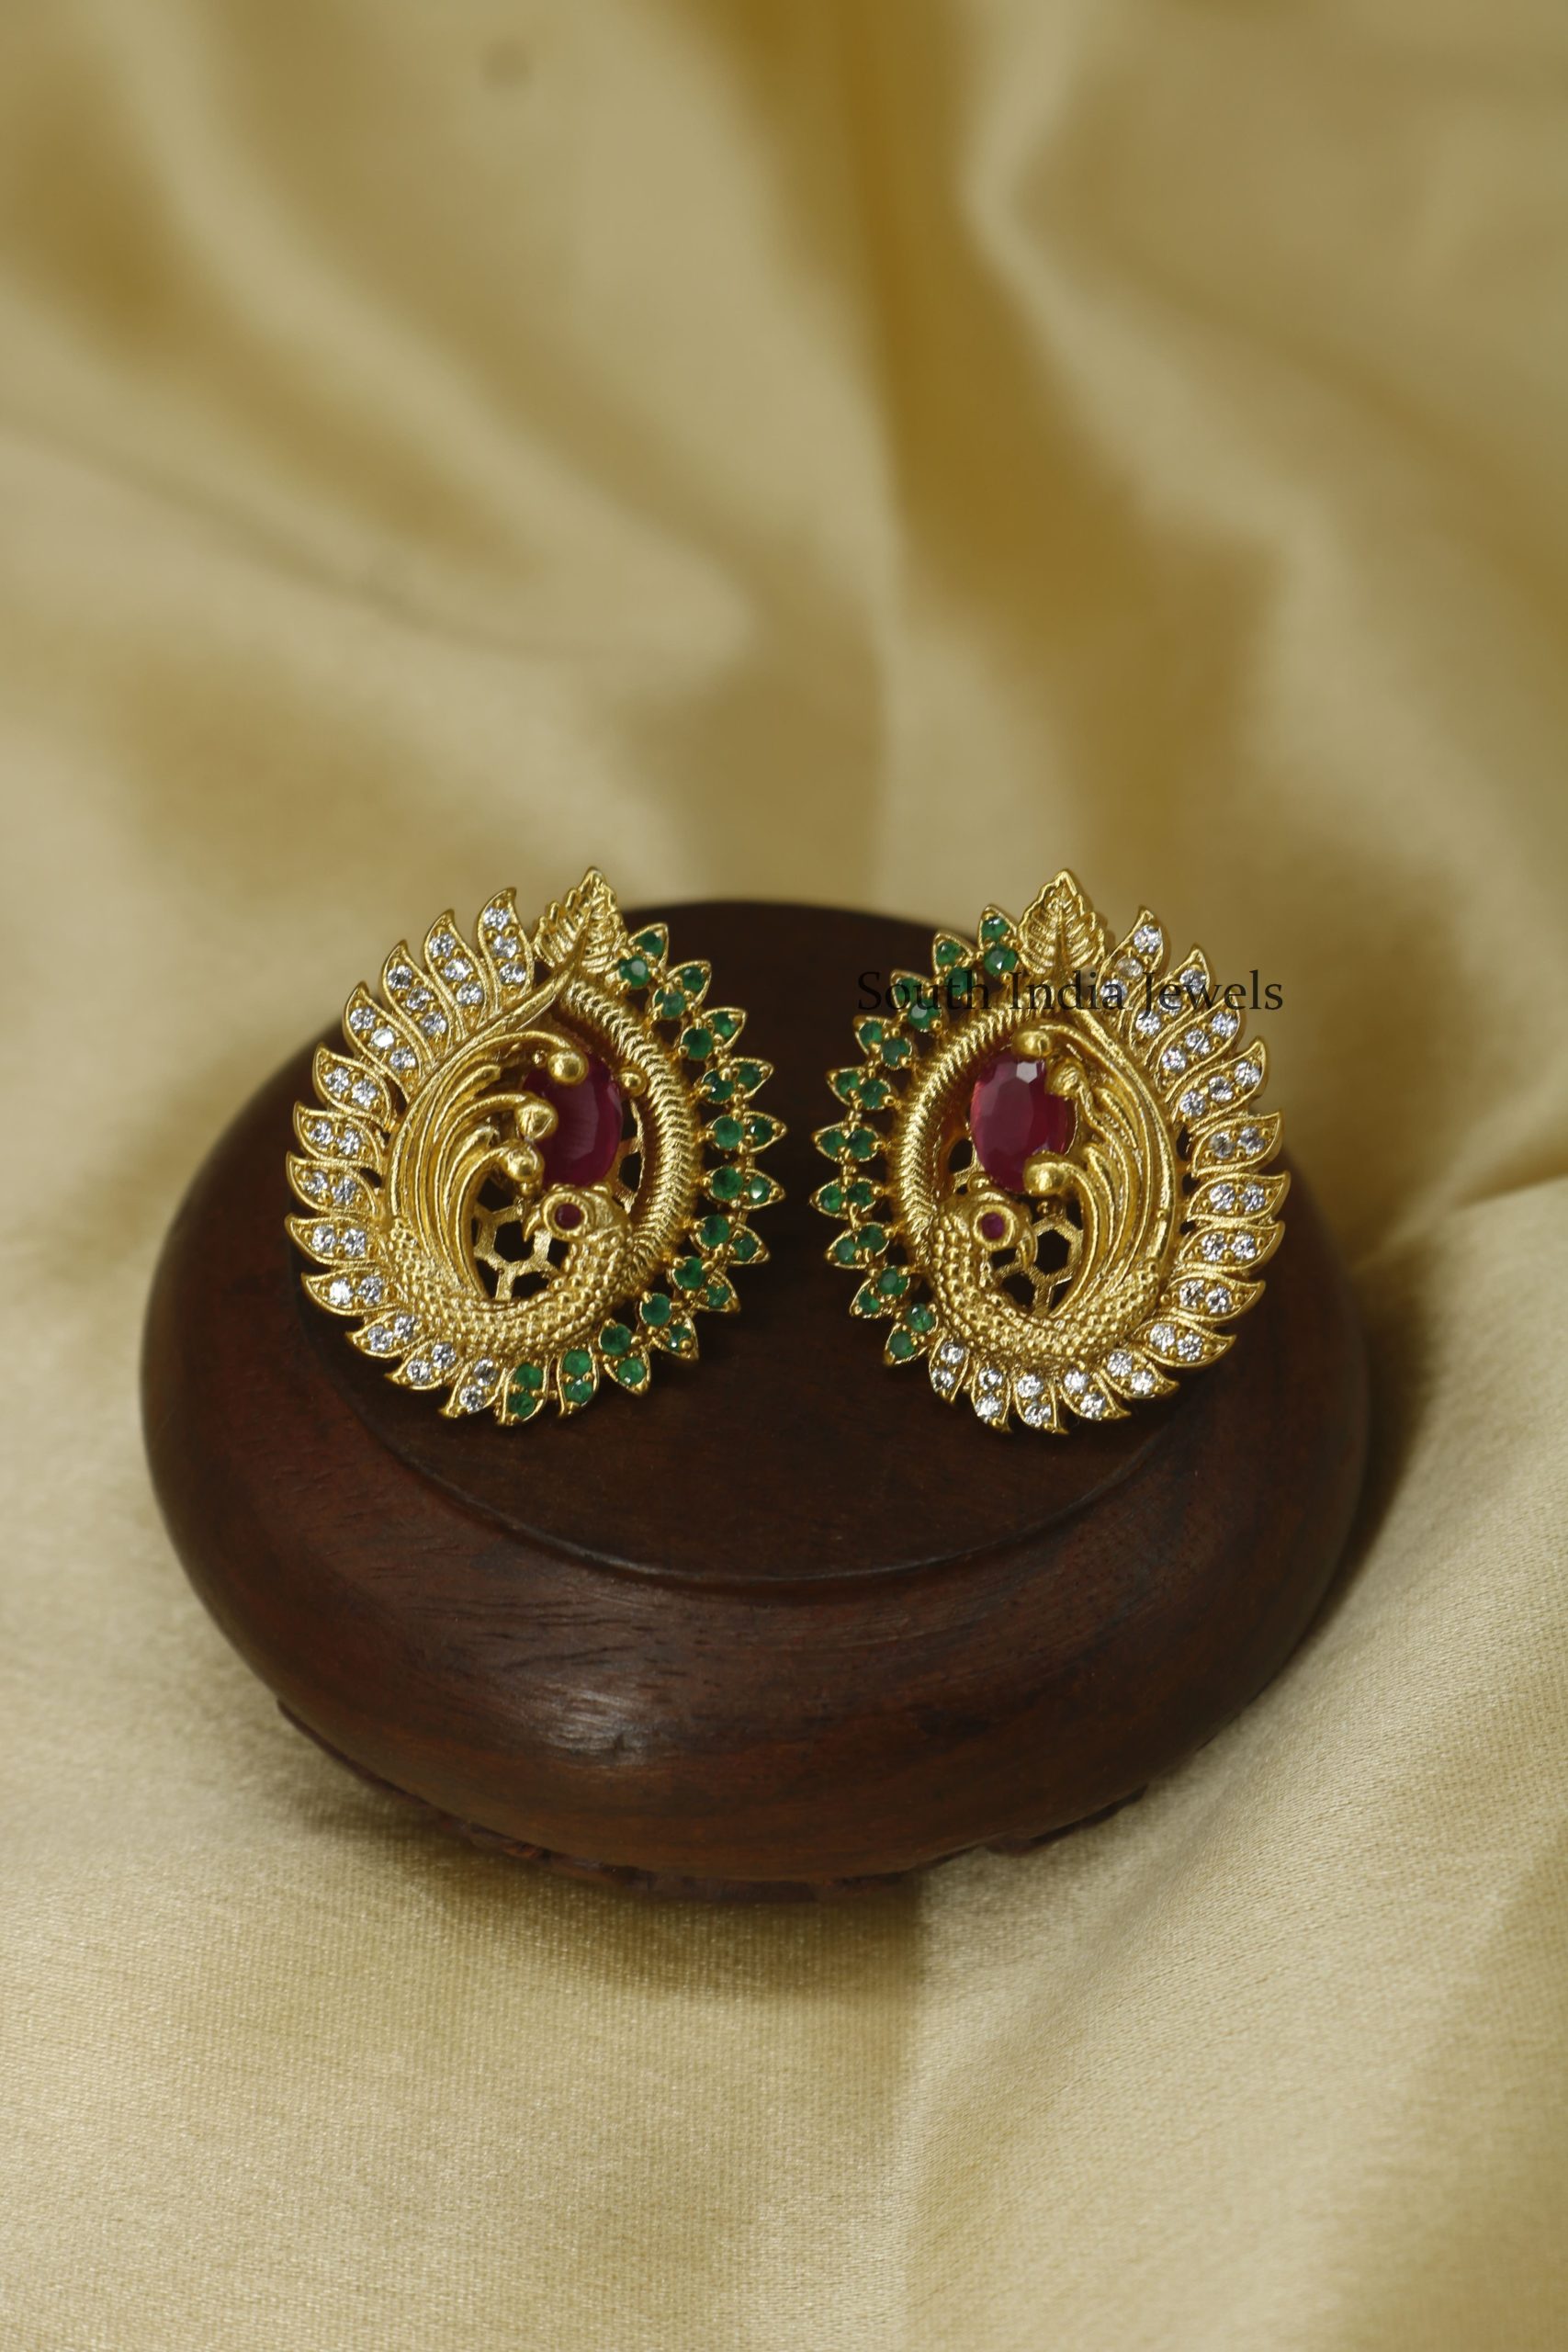 Pretty Peacock Design Earrings (2)